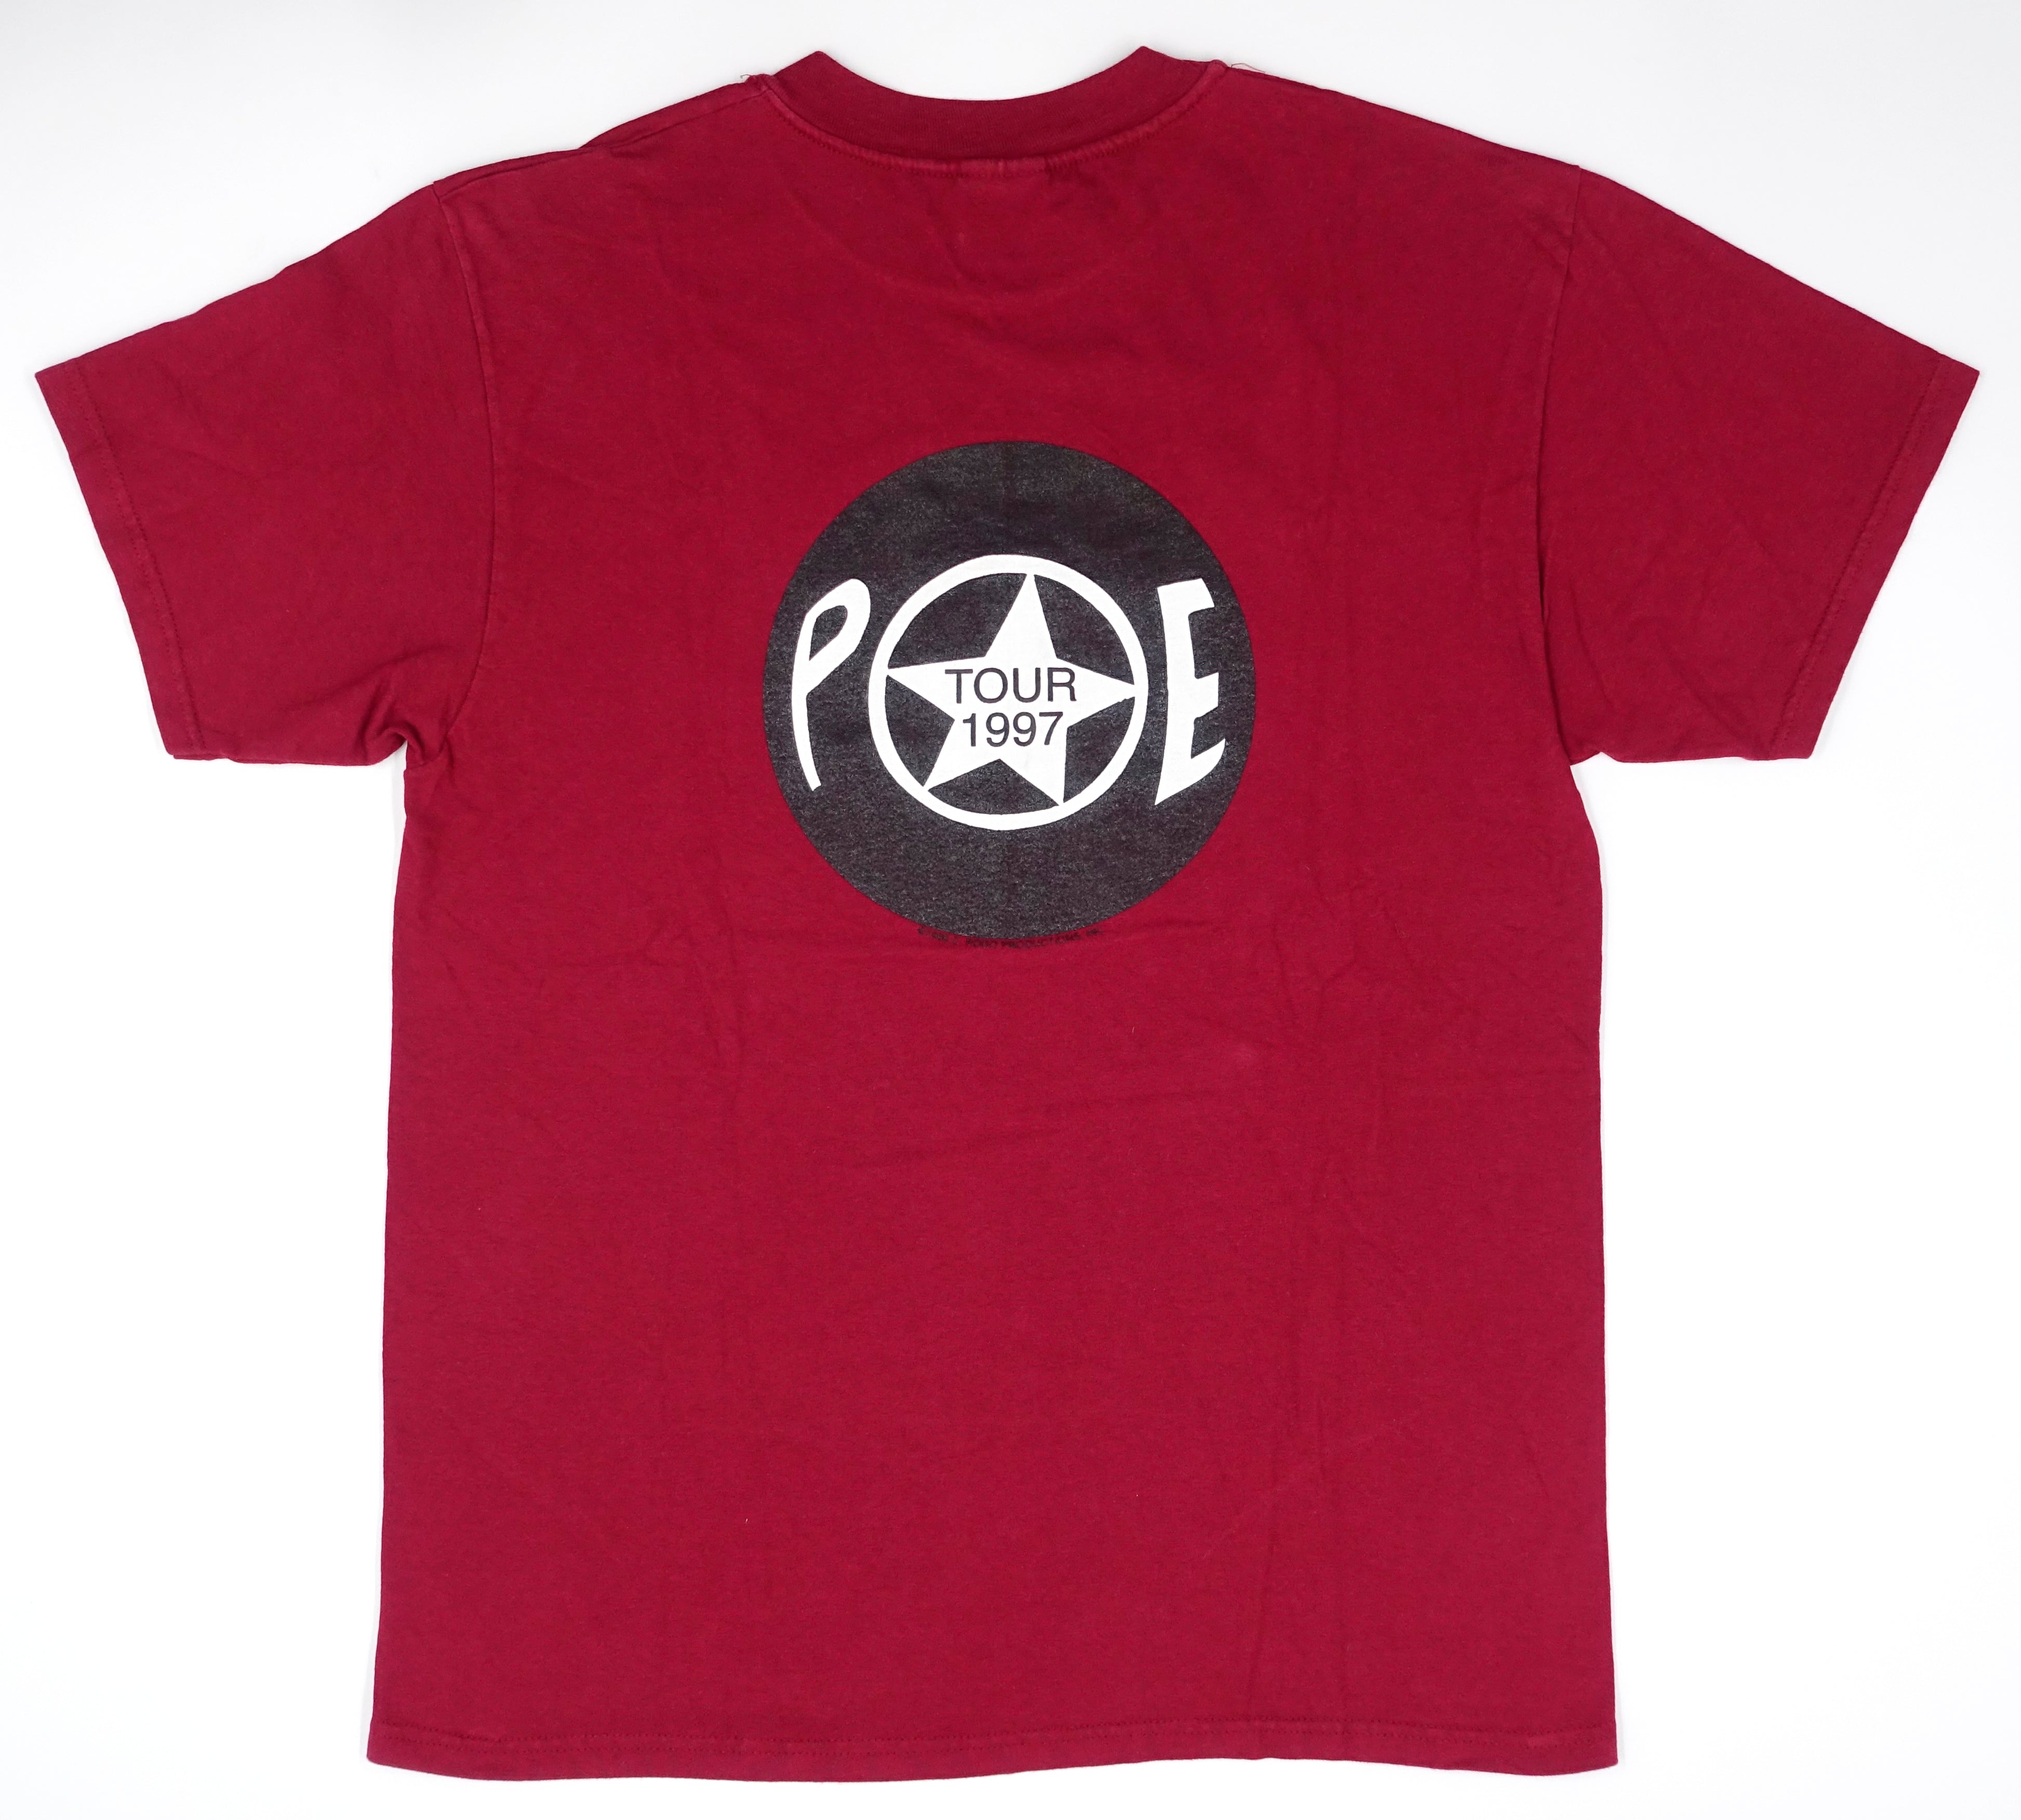 Poe – Hello 1997 Tour Shirt Size Large